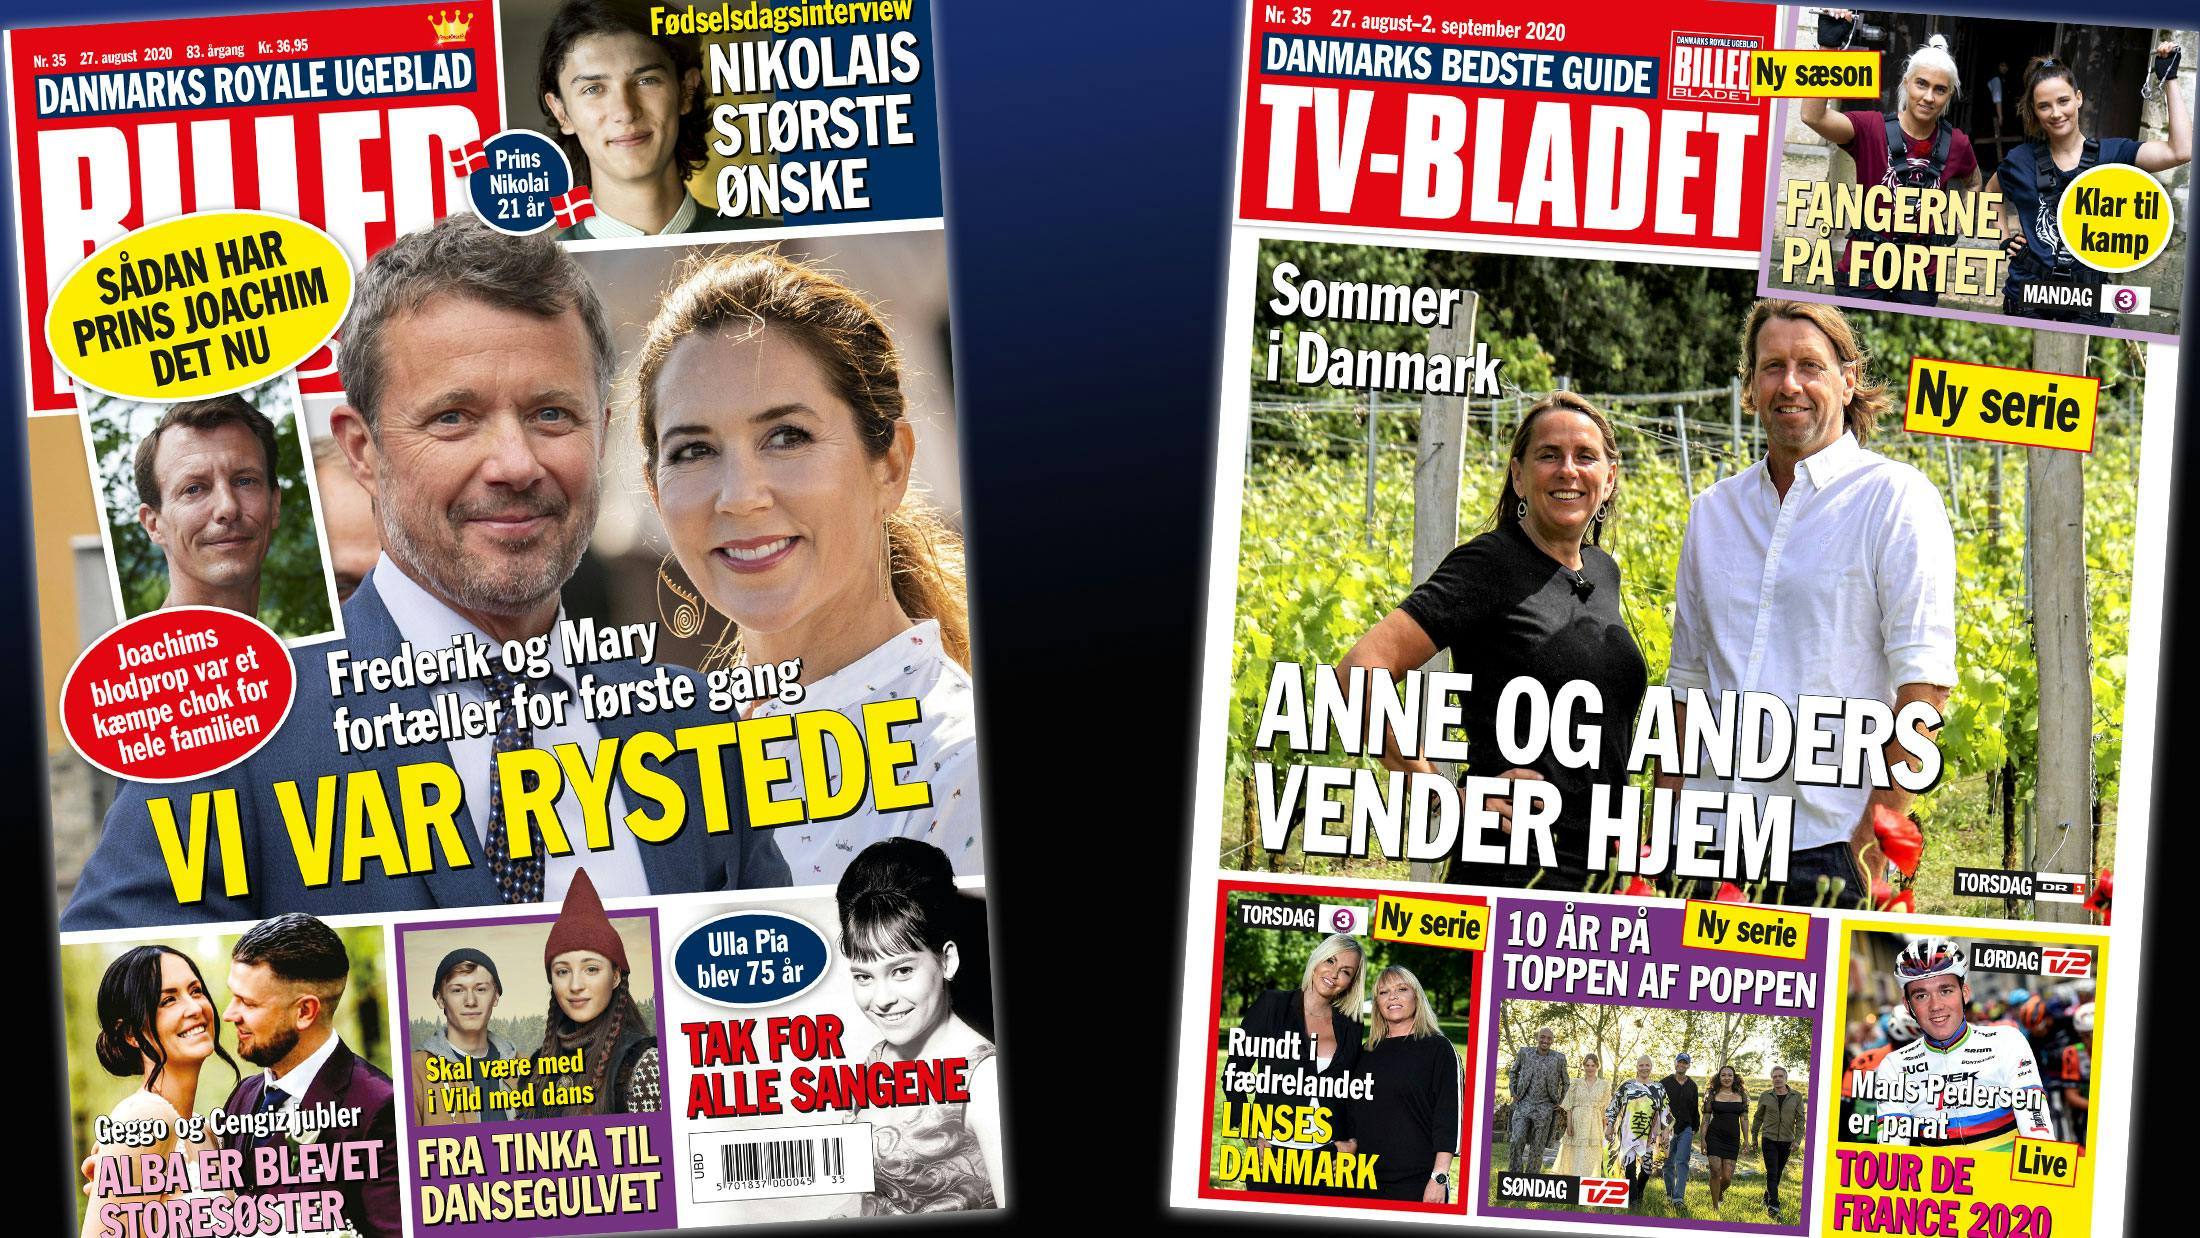 https://imgix.billedbladet.dk/media/article/webgrafik_bb35-forsider.jpg